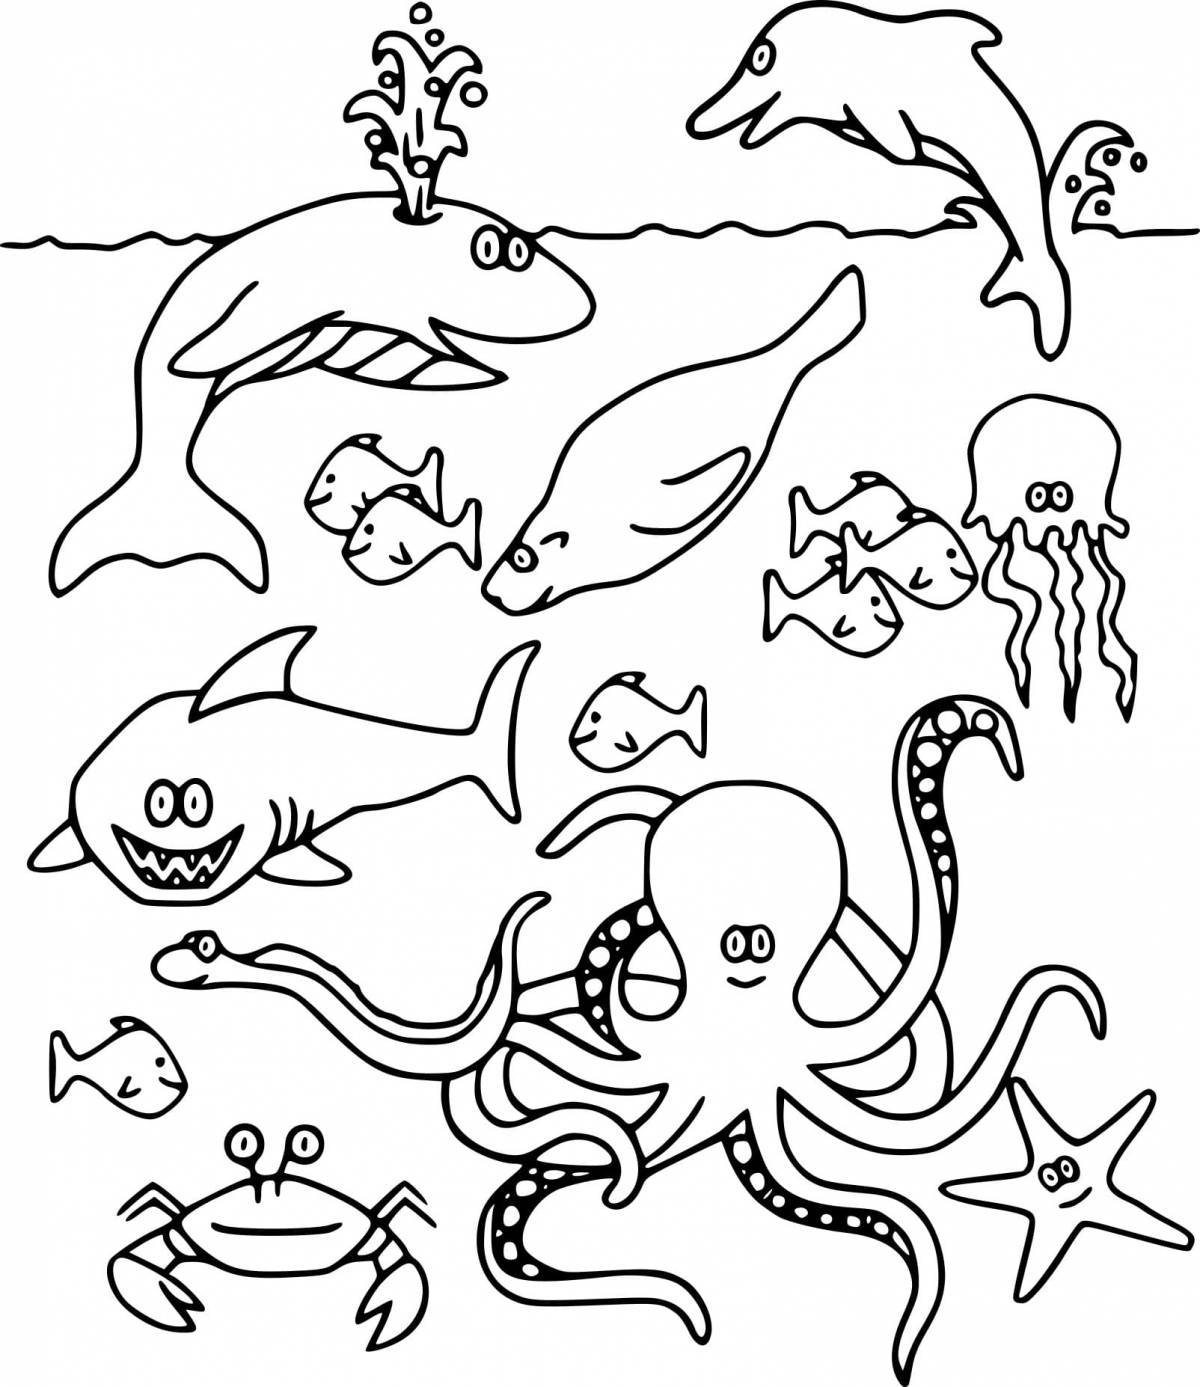 Adorable sea creature coloring book